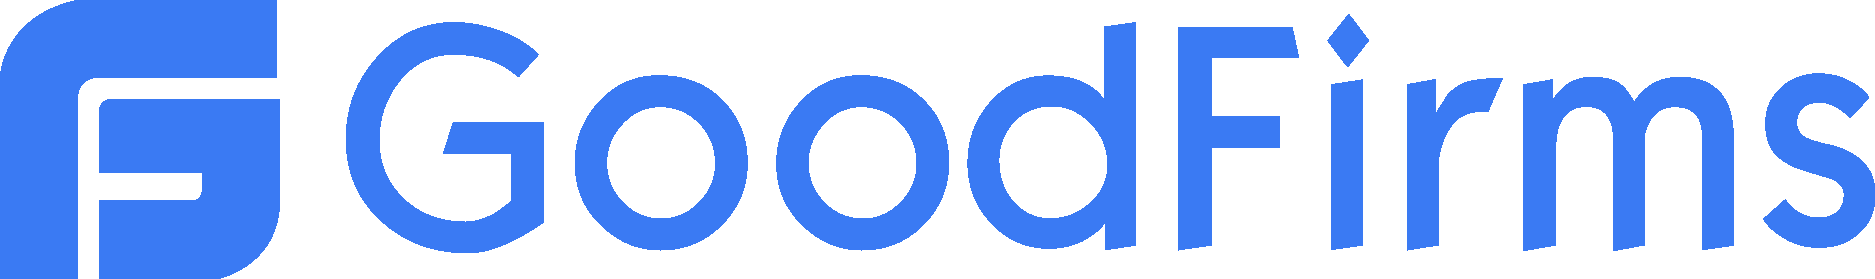 logo-goodfirms